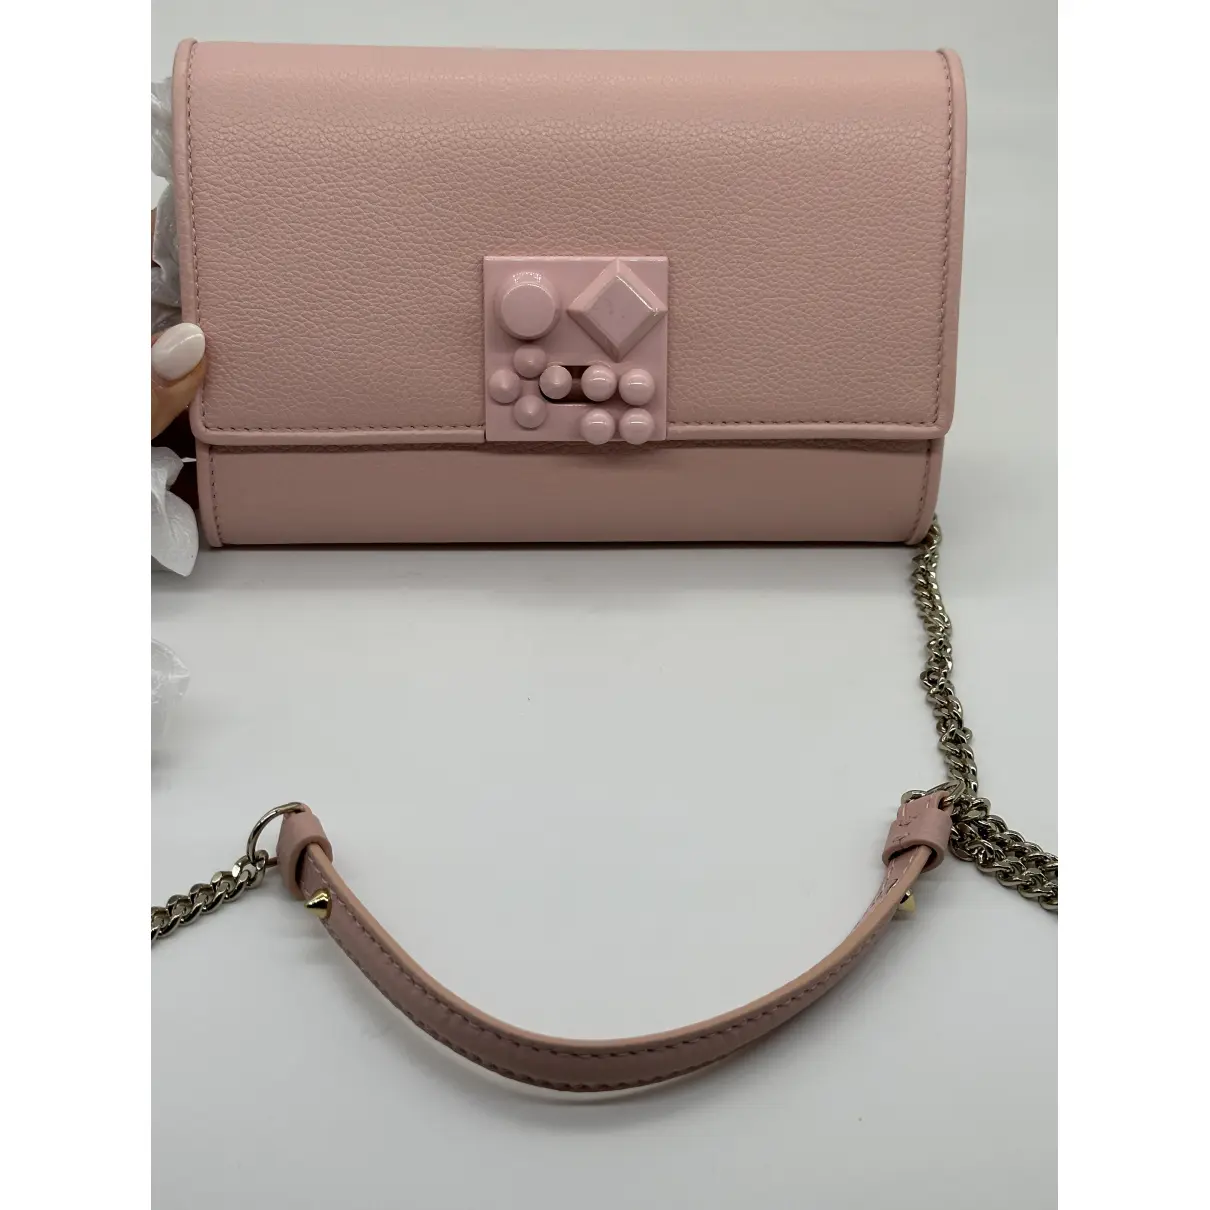 Buy Christian Louboutin Carasky leather mini bag online